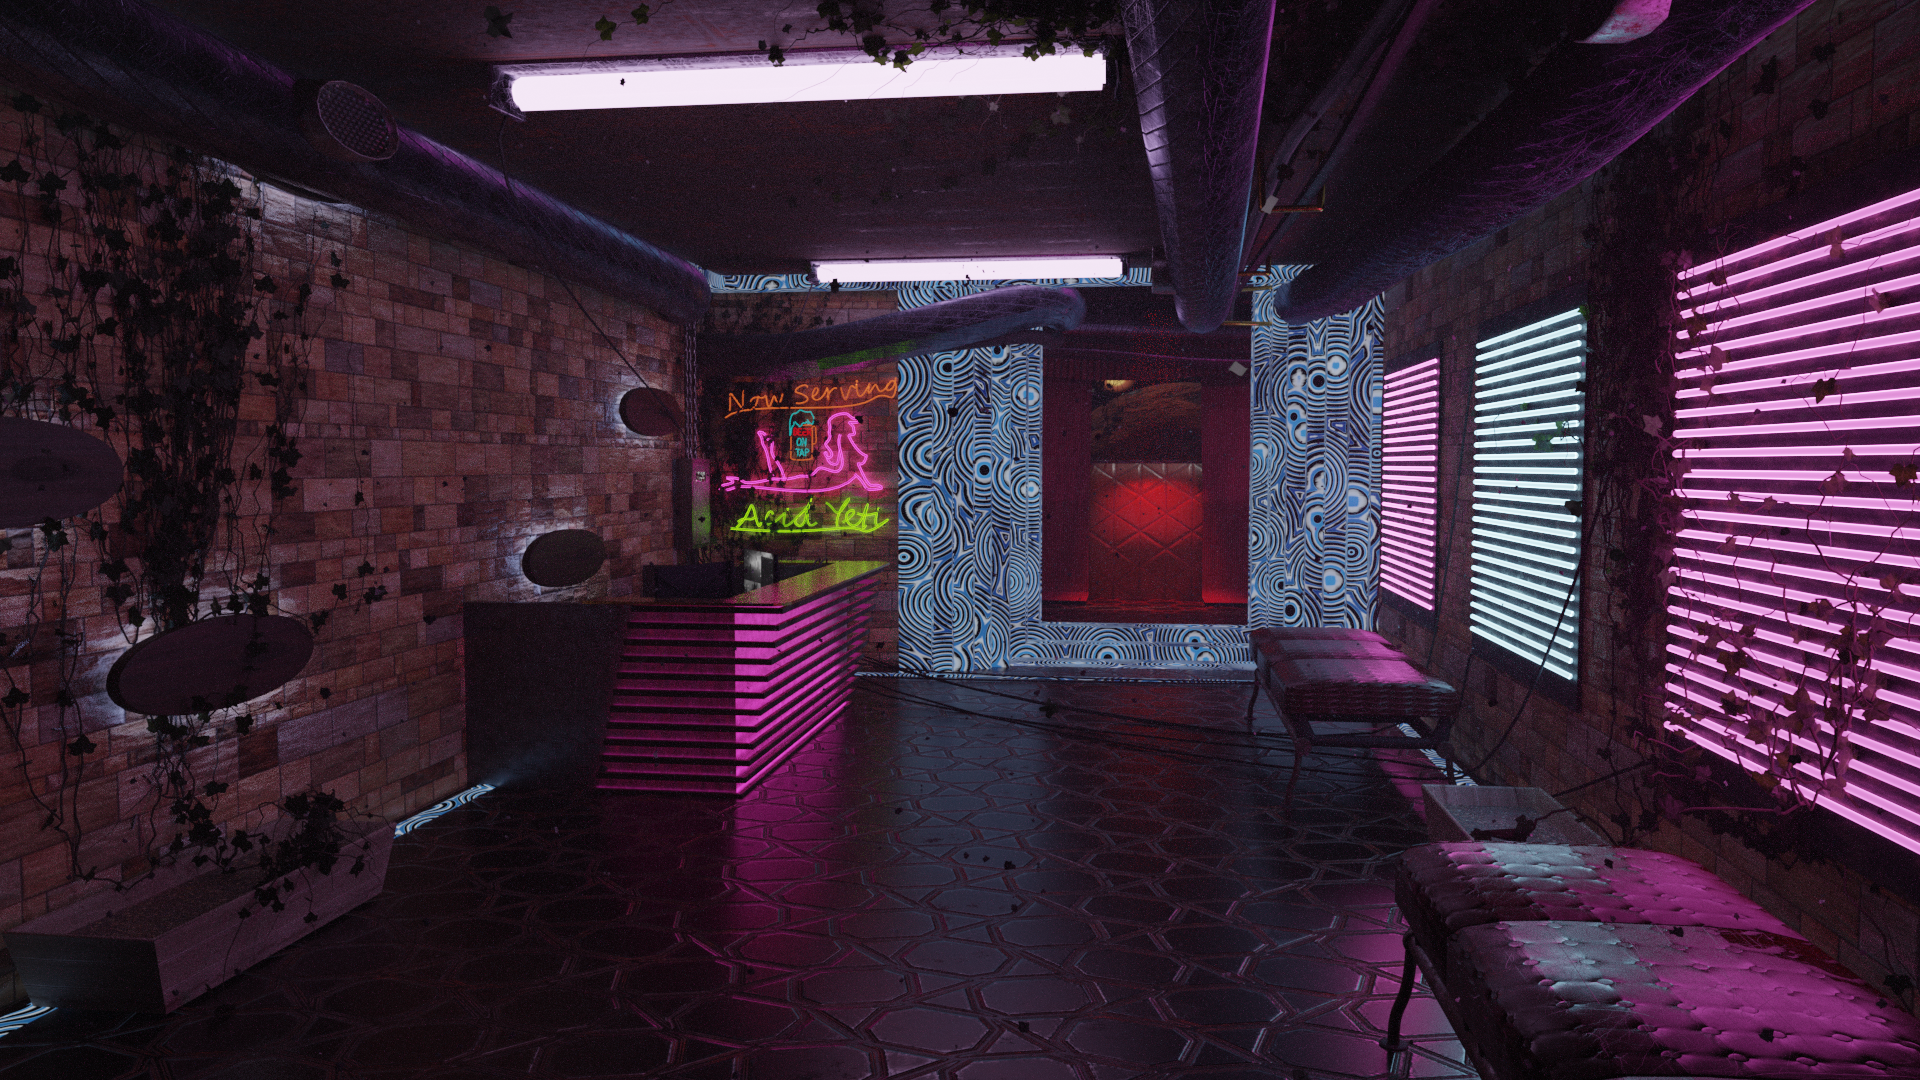 Ночной клуб туалет видео. Киберпанк 2077 кафе. Cyberpunk 2077 бар. Киберпанк кафе Москва. Кафе в стиле киберпанк.